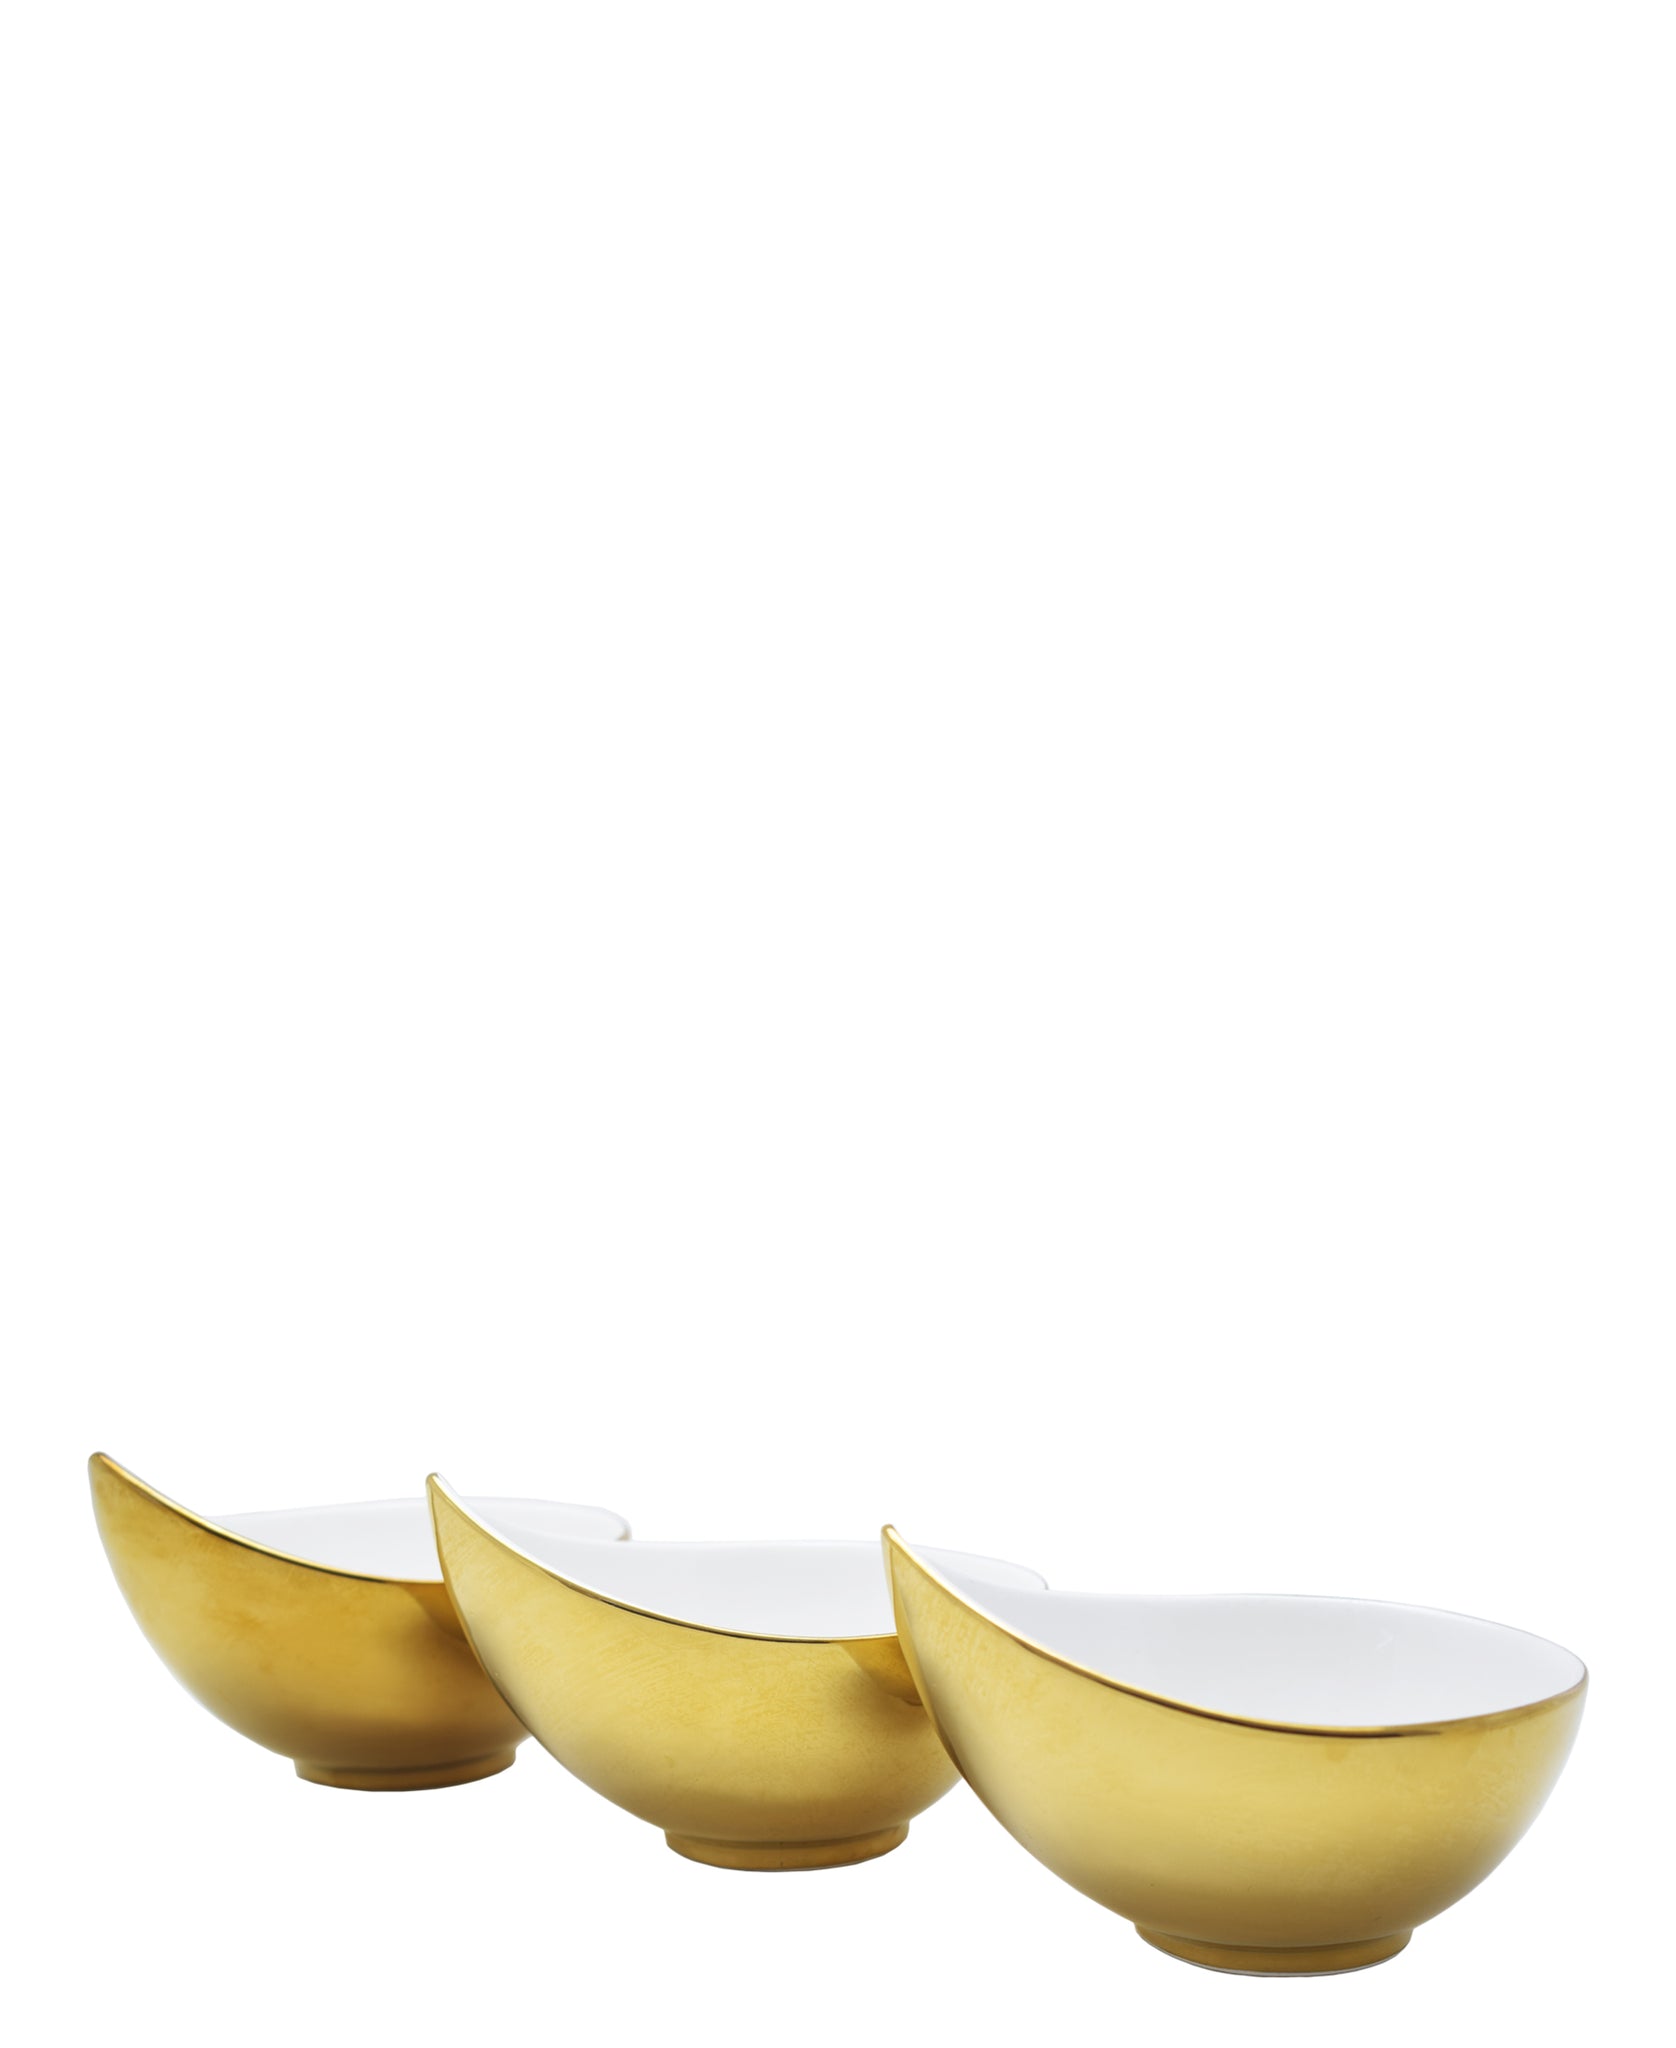 Symphony Adorn Bowl Set Of 3 - White & Gold